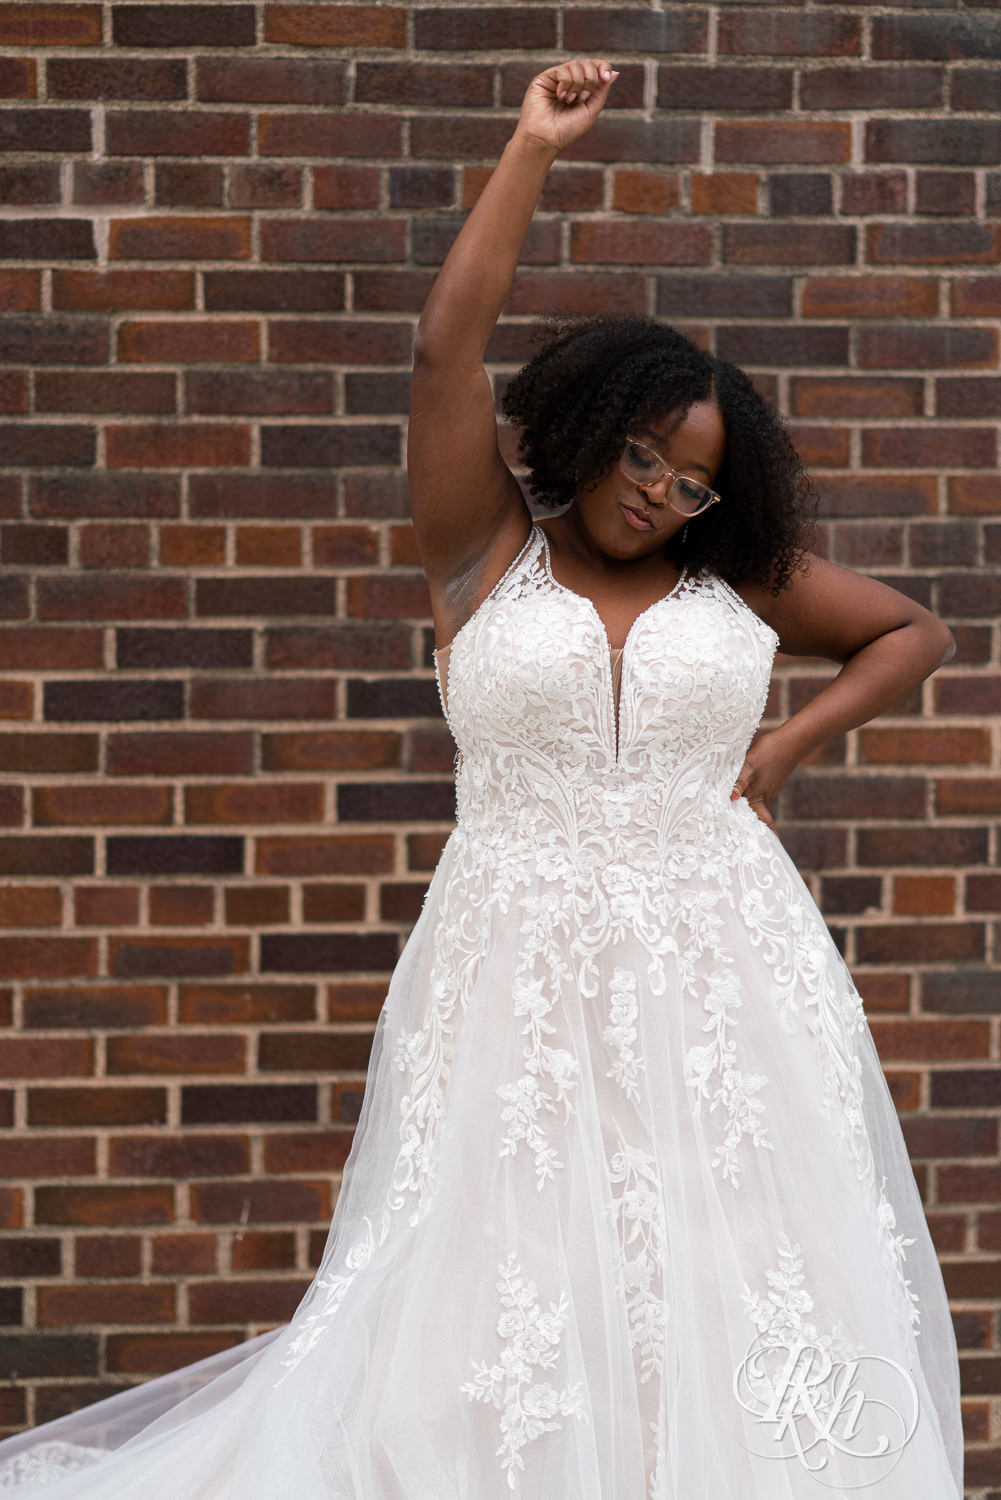 Black plus size bride smiling in wedding dress in Minneapolis, Minnesota.